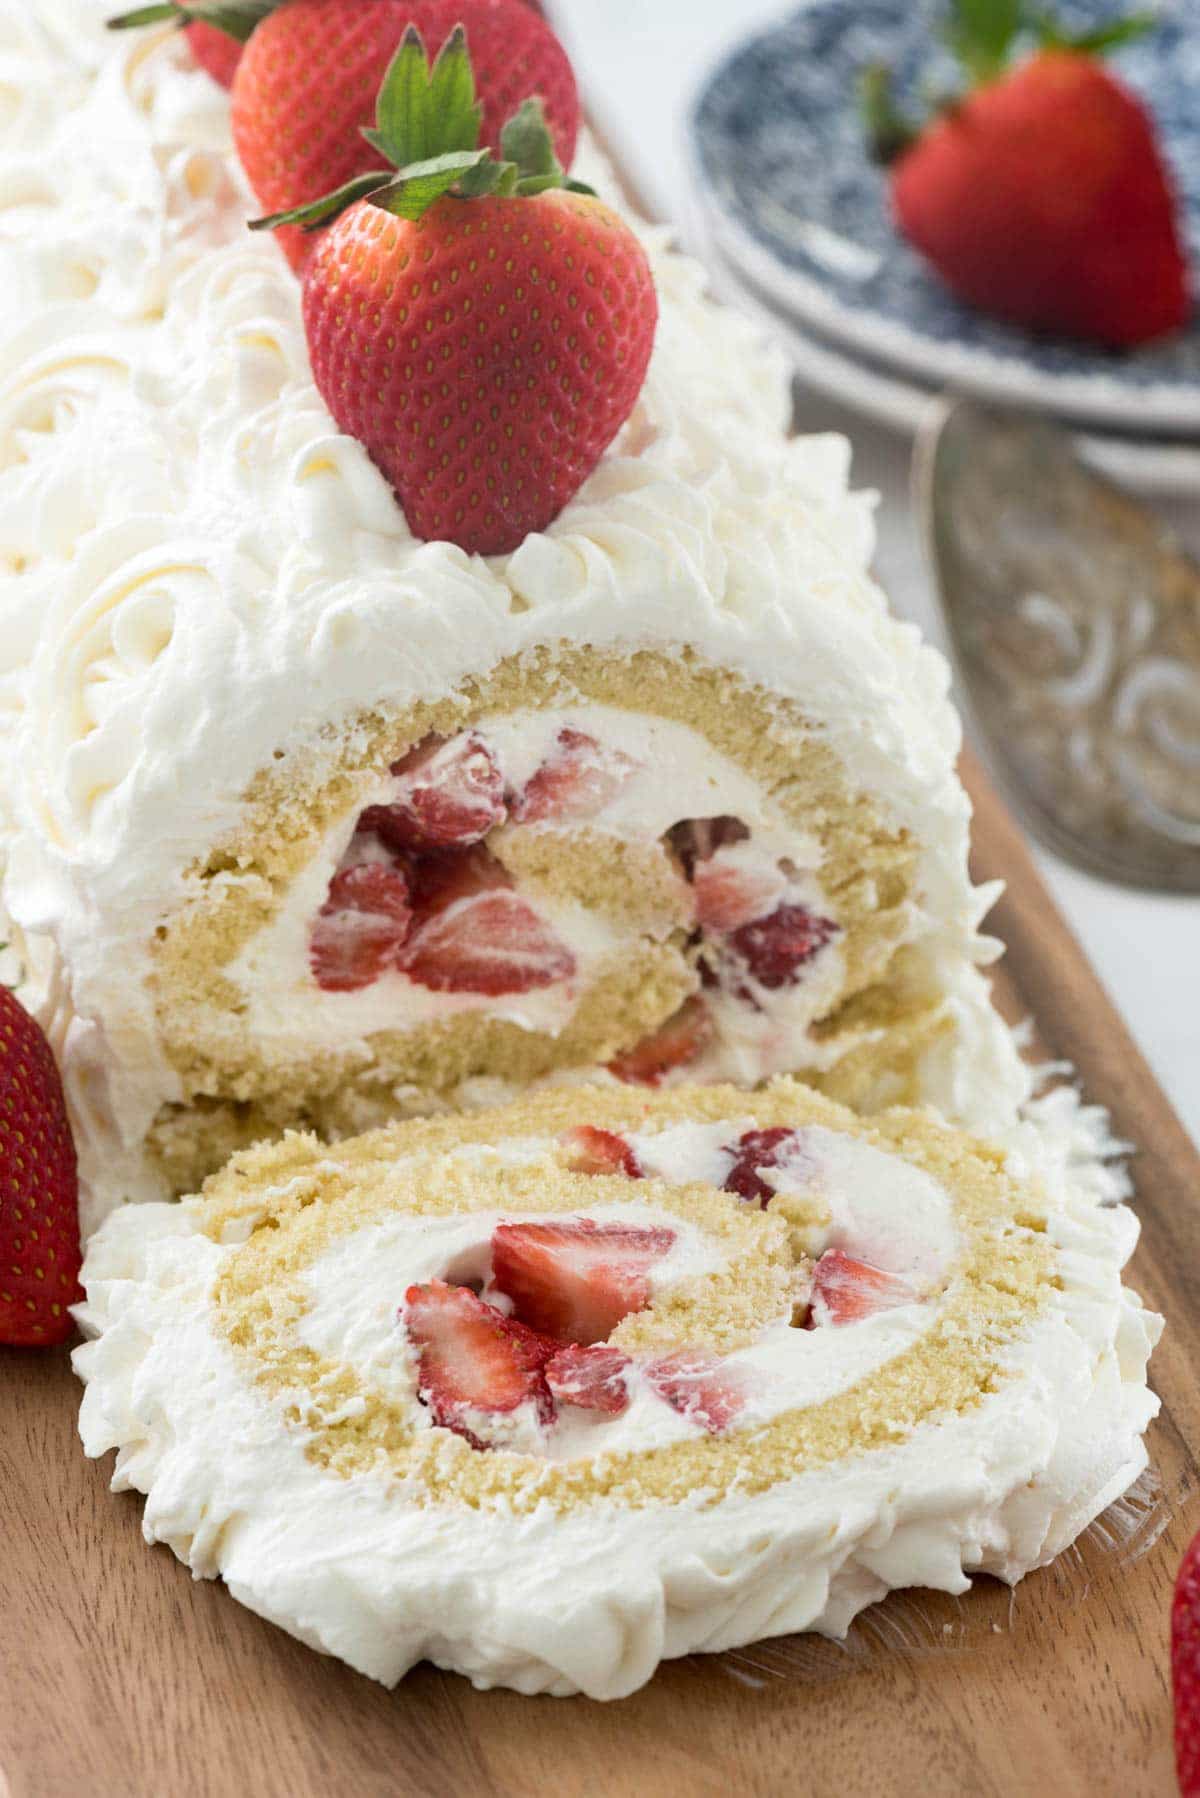 https://www.crazyforcrust.com/wp-content/uploads/2016/03/Strawberry-Shortcake-Cake-Roll-2-of-7.jpg